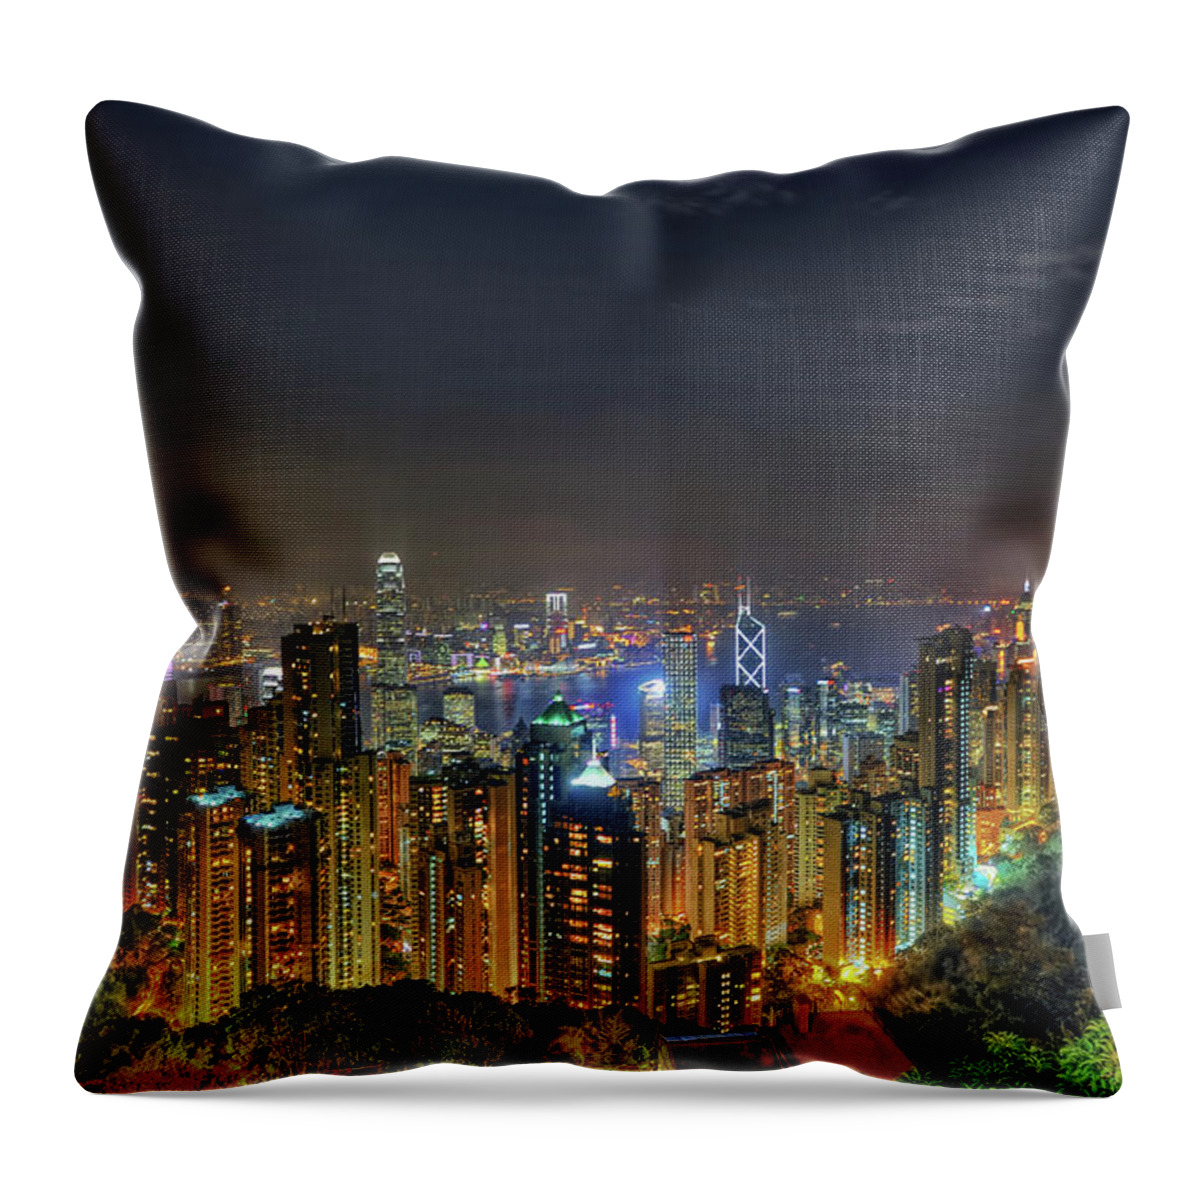 Outdoors Throw Pillow featuring the photograph Hong Kong City #1 by Daniel Chui